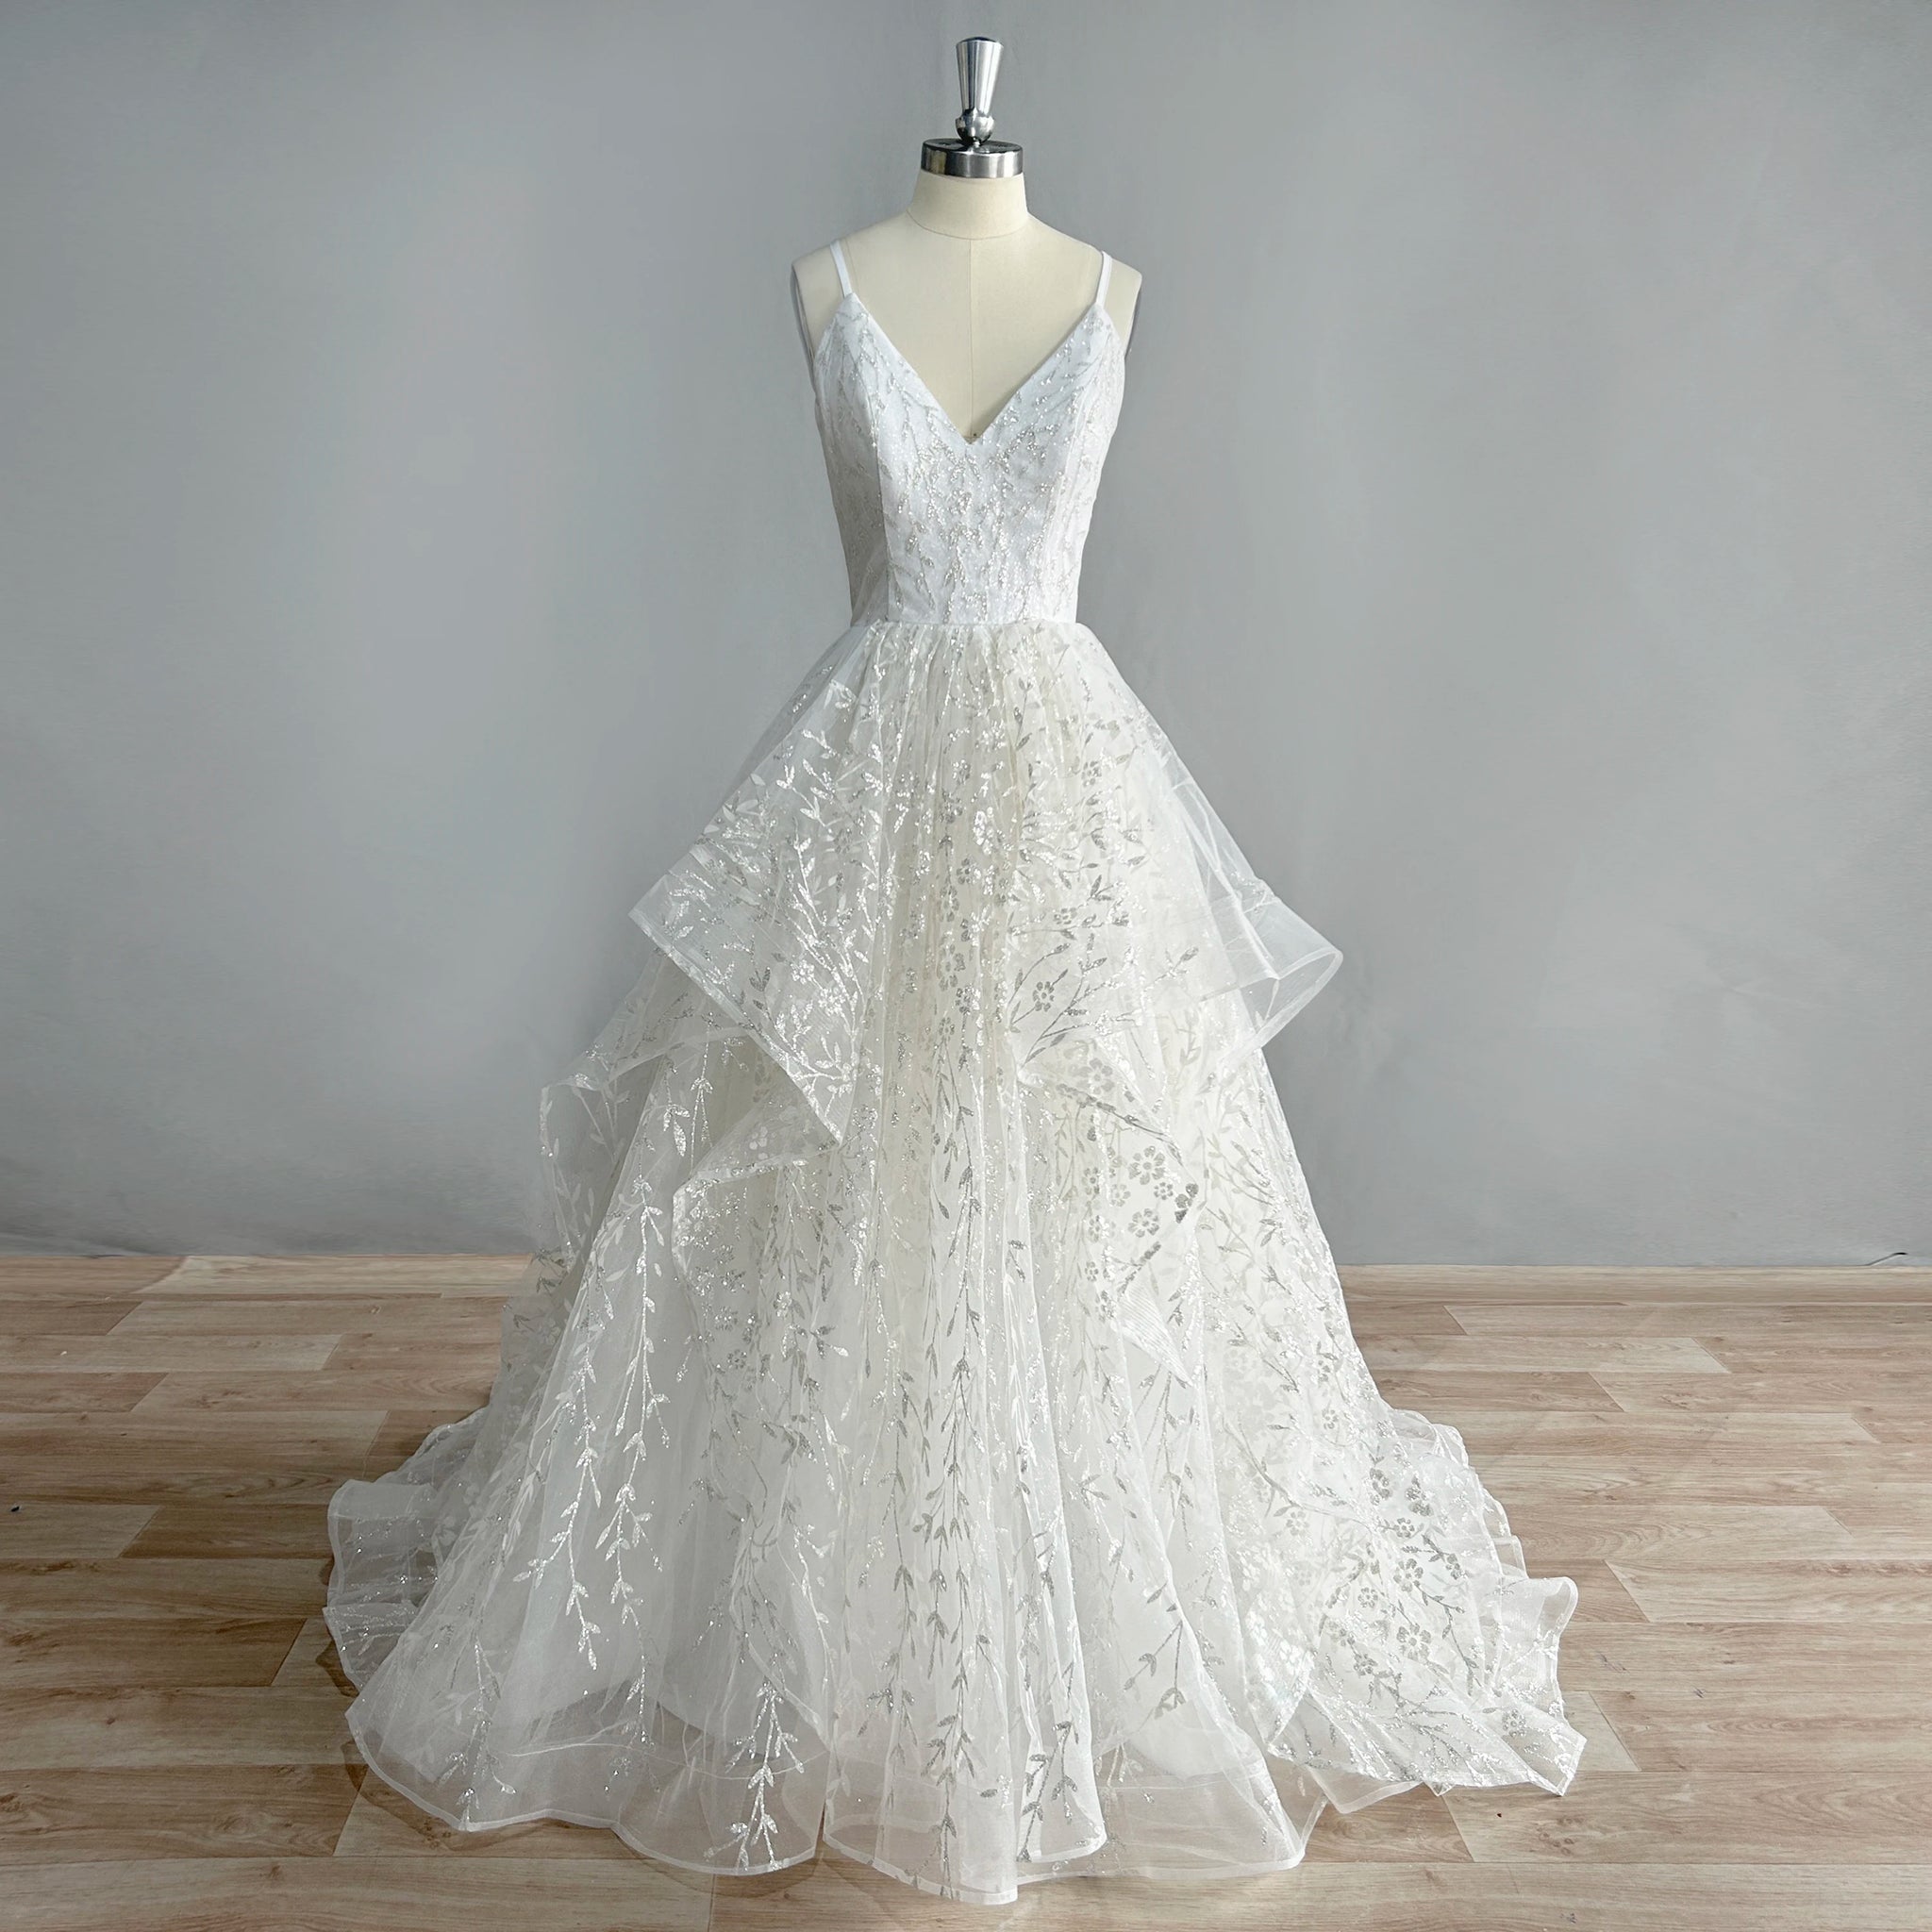 Sparkly Spaghetti Straps Princess Wedding Dress V Neck Shiny Lace Sleeveless Gorgeous Bride Gown